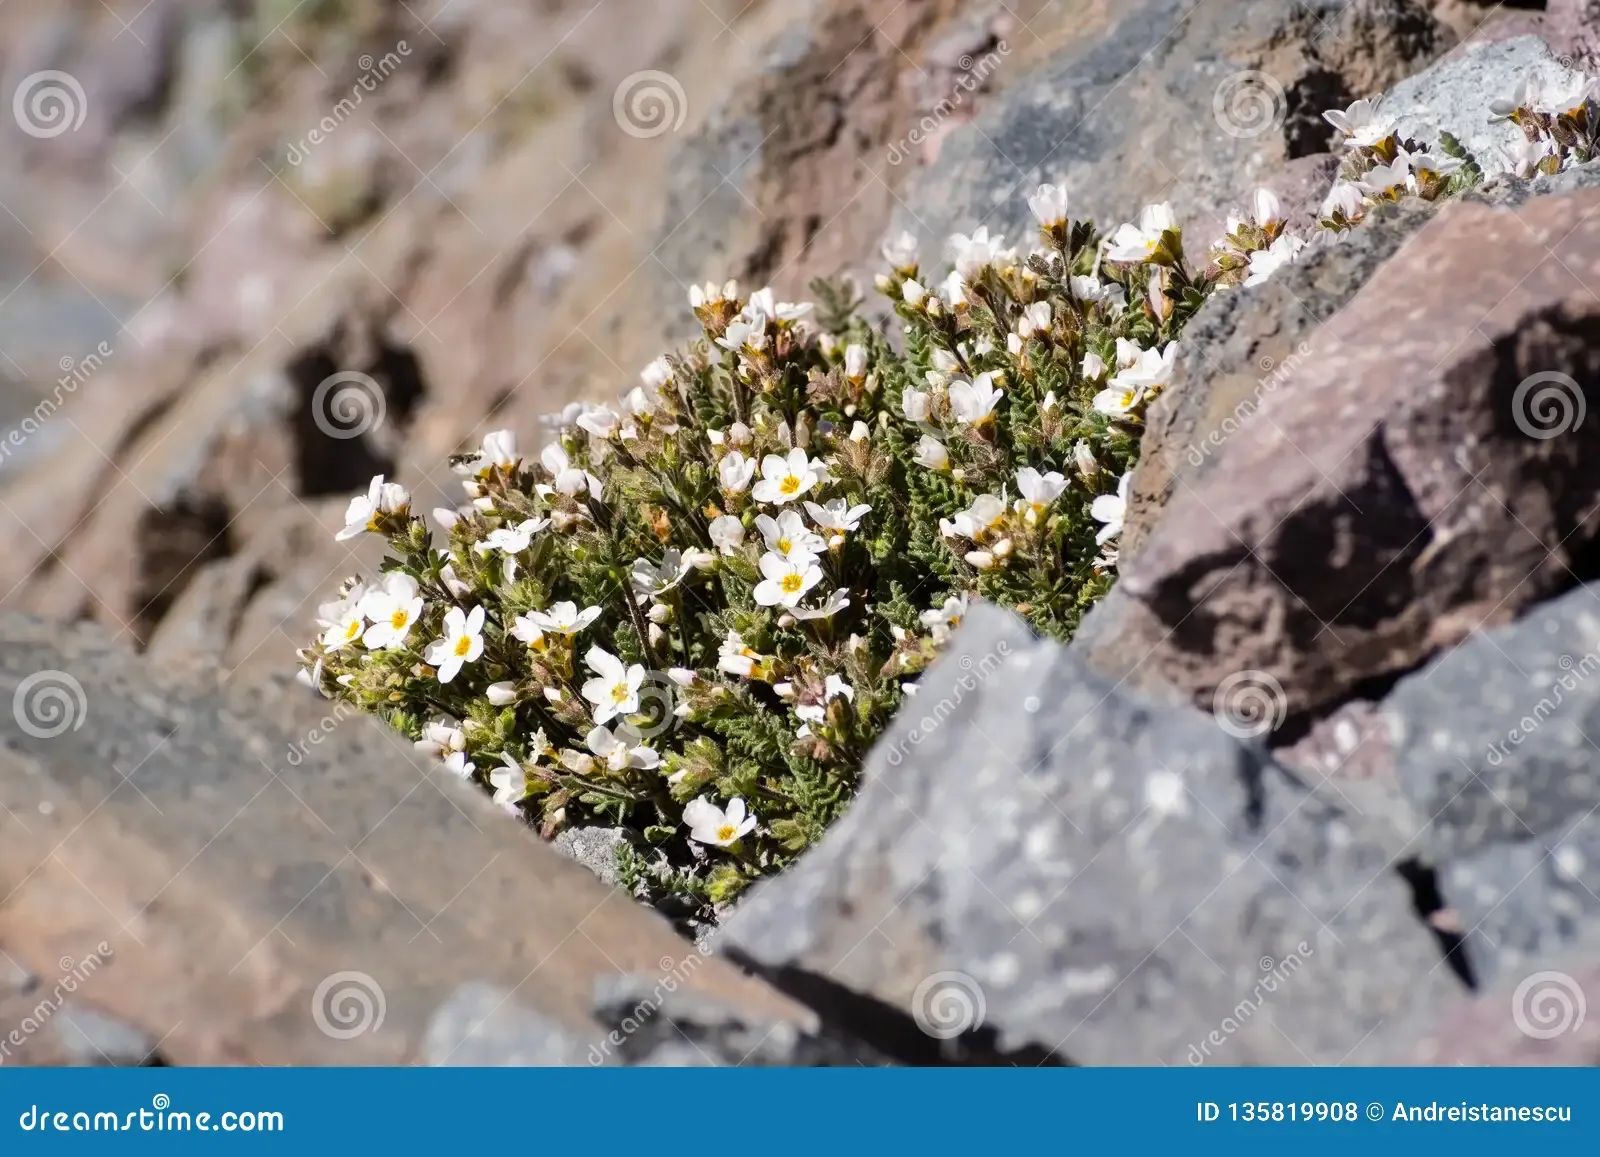 white-flowered-sky-pilot-polemonium-pulcherrimum-var-pilosum-blooming-lassen-volcanic-national-park-high-altitude-135819908.jpg